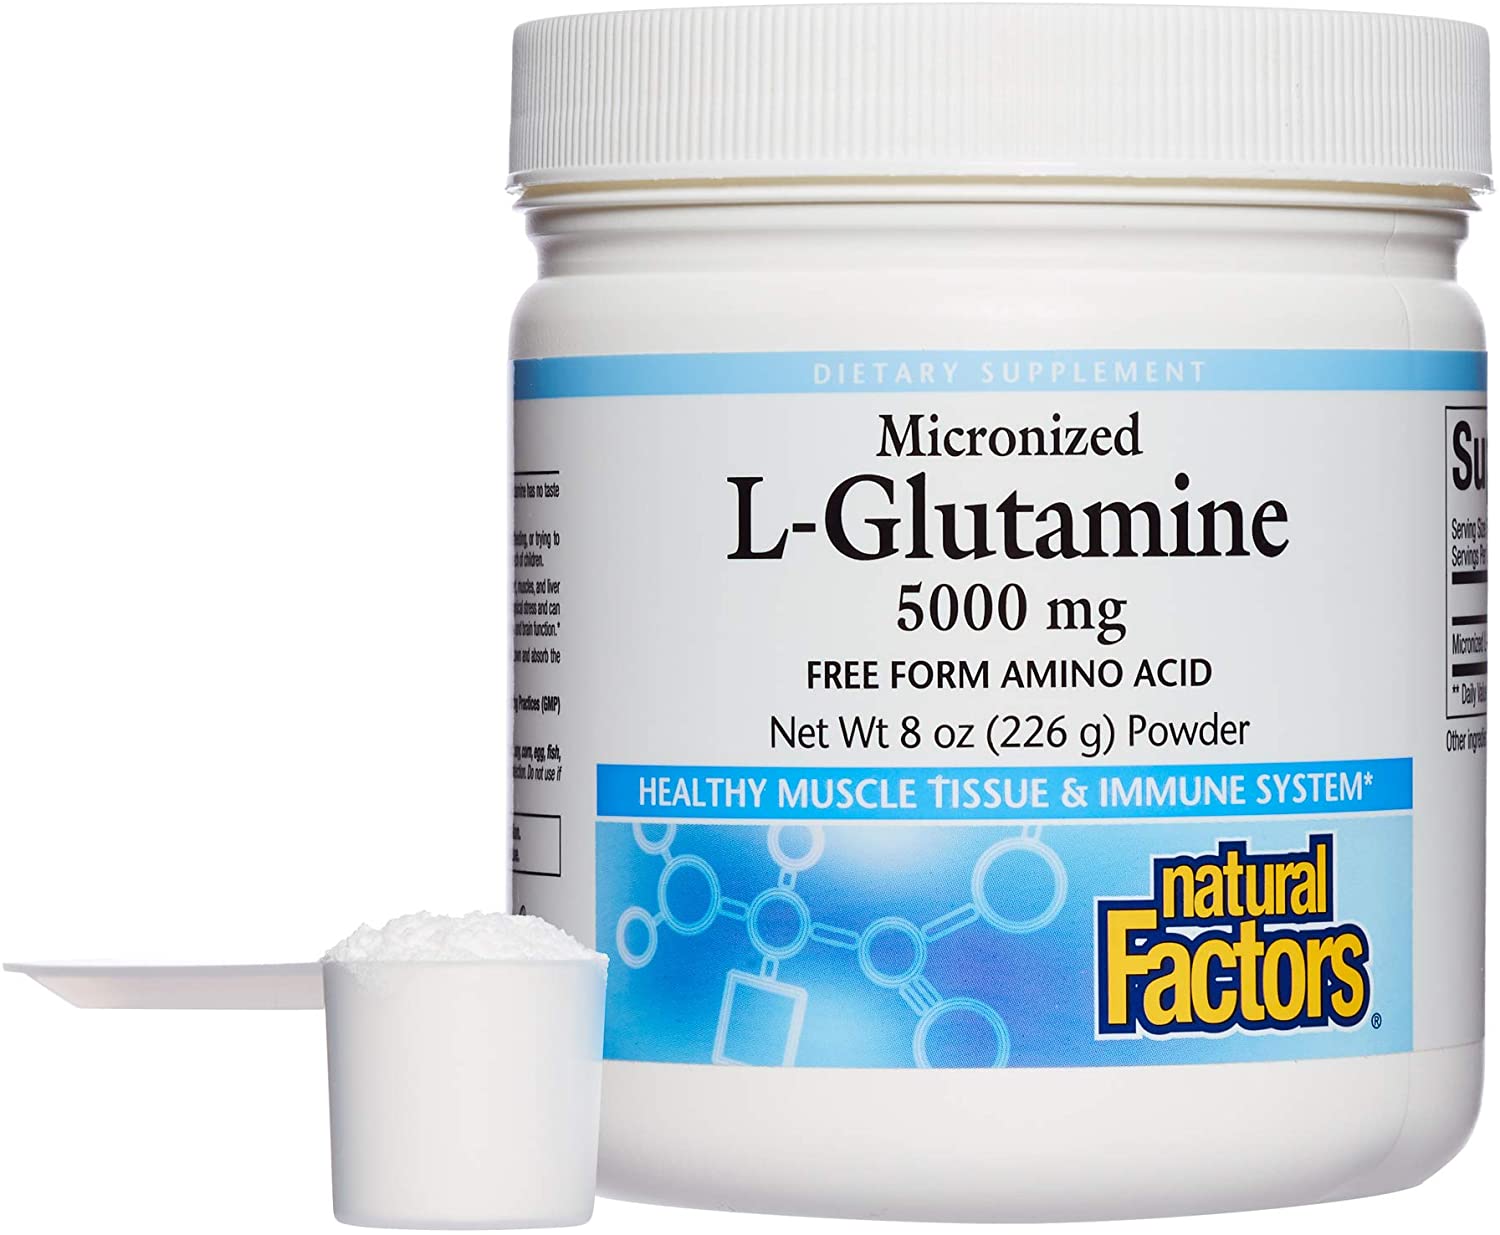 Natural Factors Micronized L-Glutamine 5g Per Serving 300g